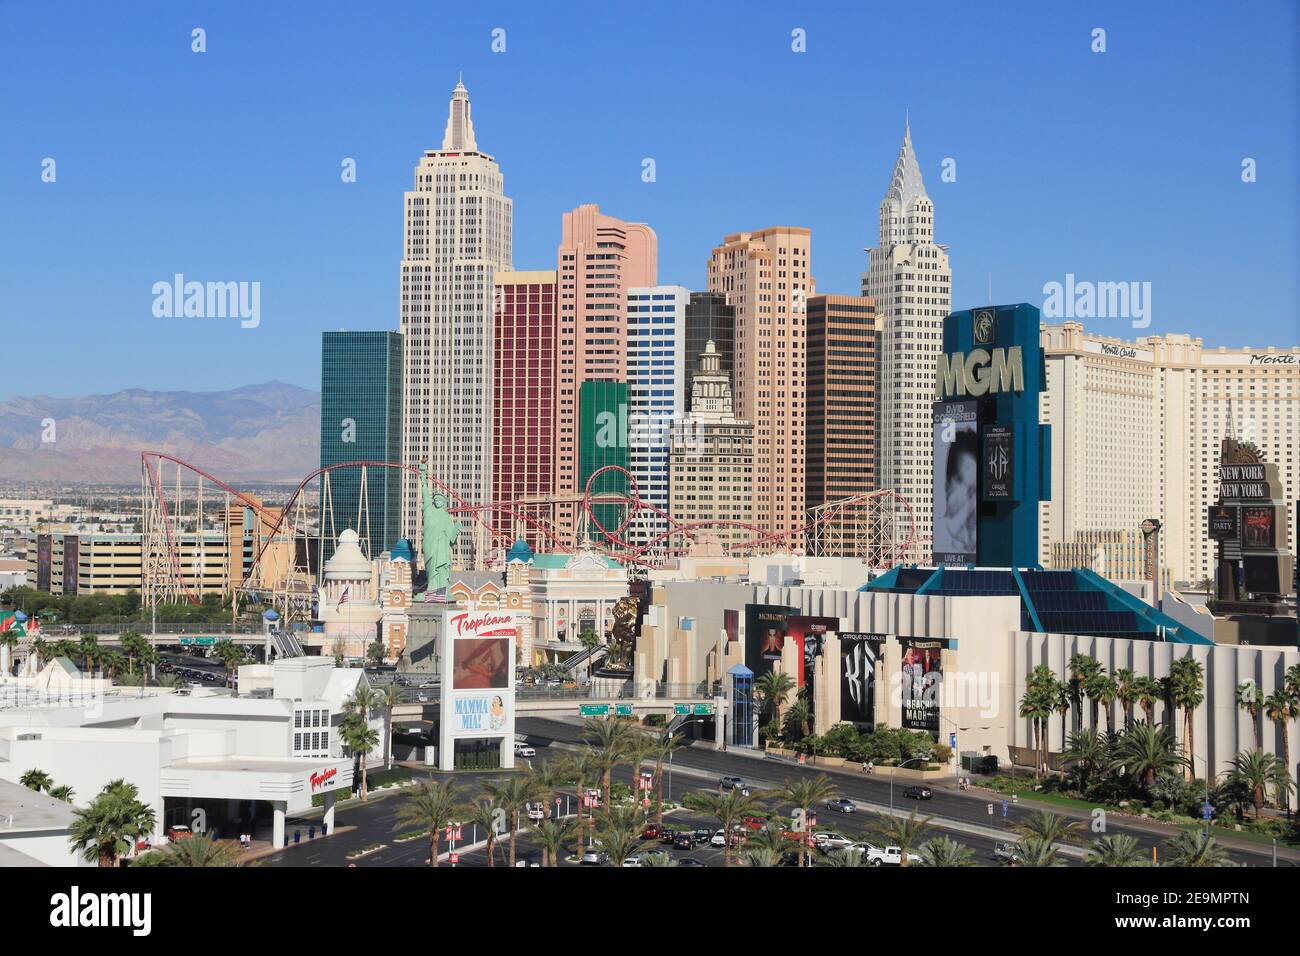 LAS VEGAS, USA - APRIL 14, 2014: New York New York resort view in Las Vegas. The complex has 2,024 rooms. Stock Photo